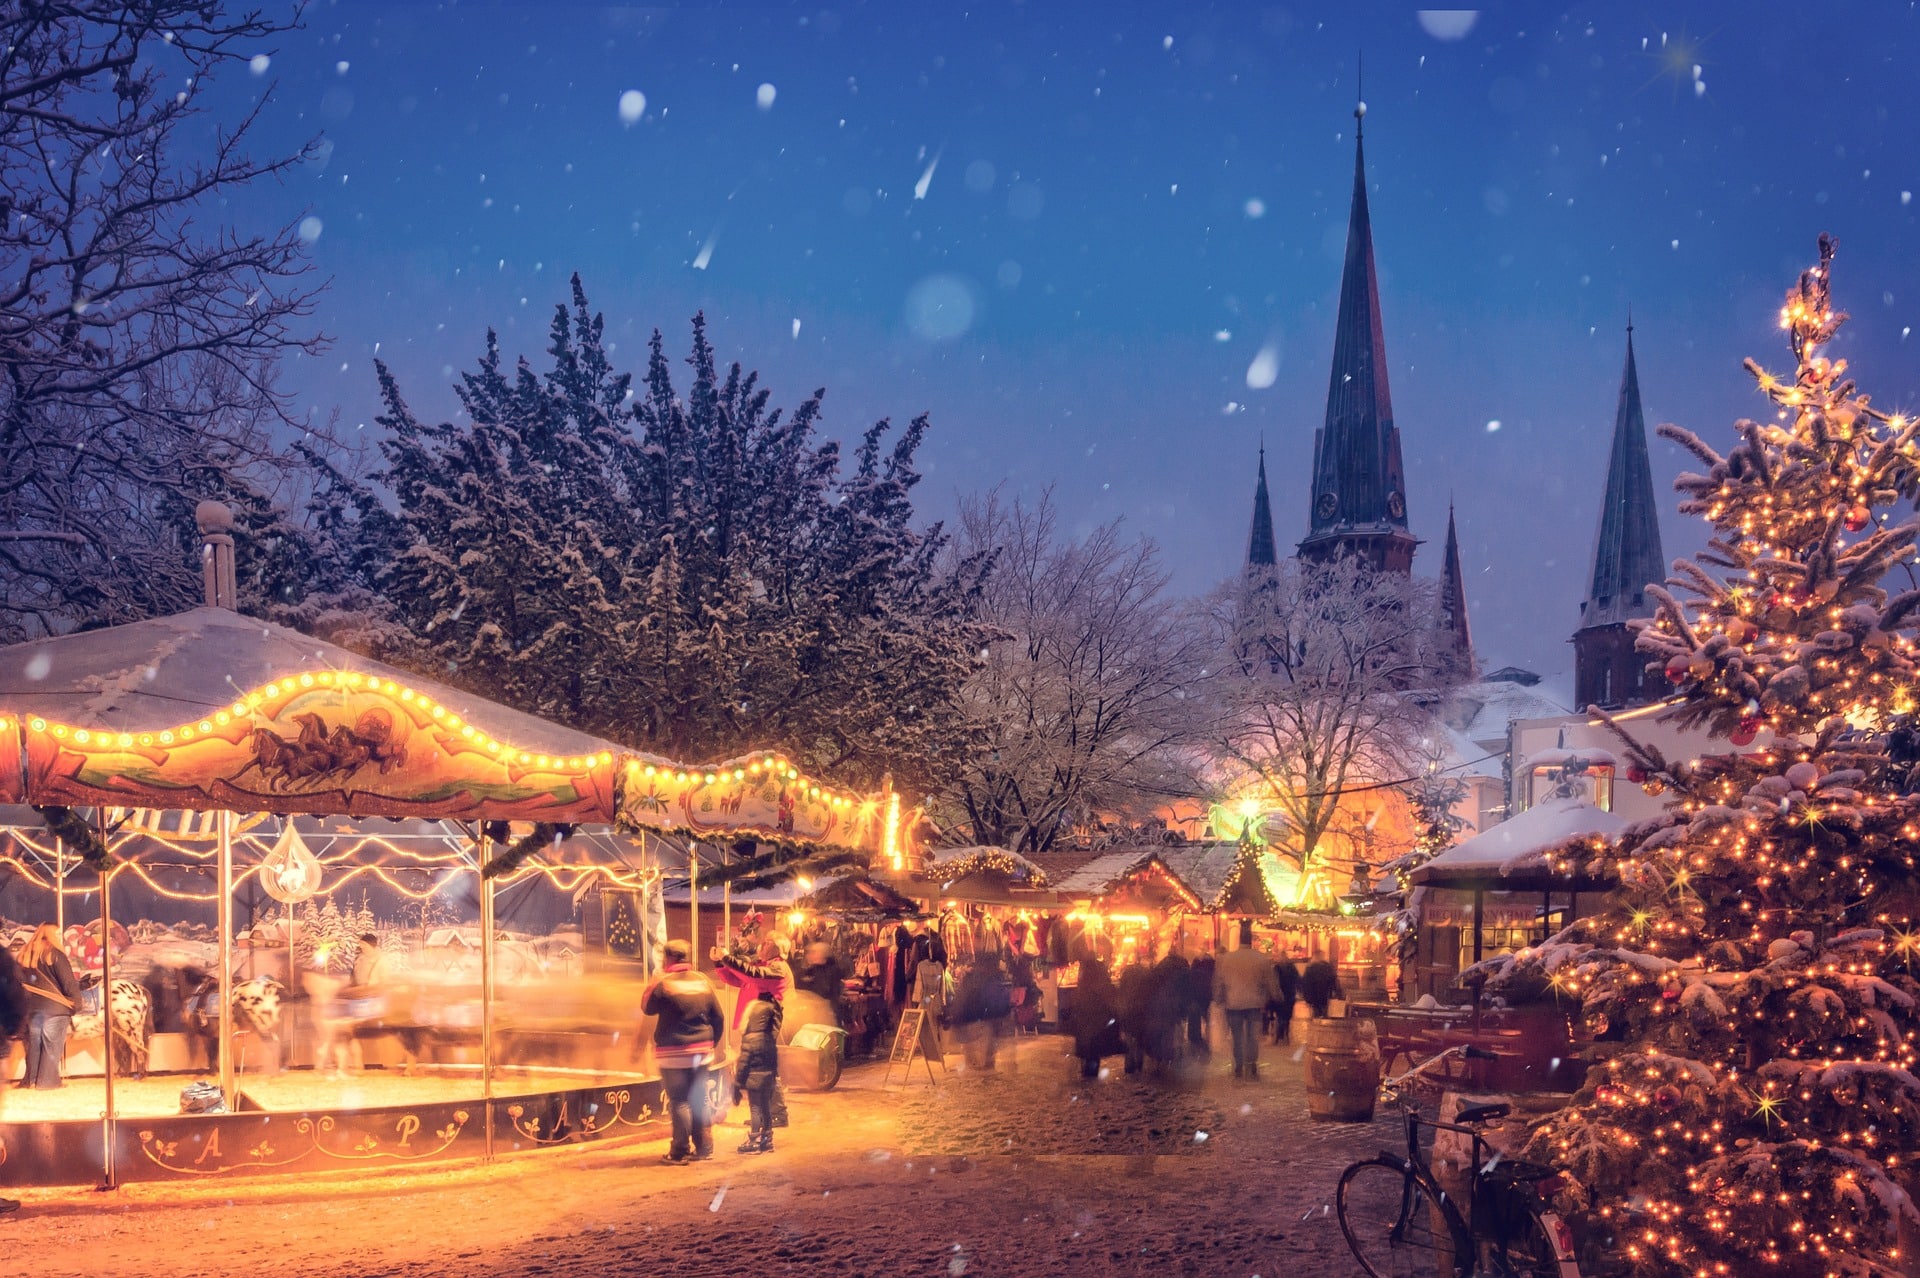 Città illuminate a festa coi mercatini di Natale